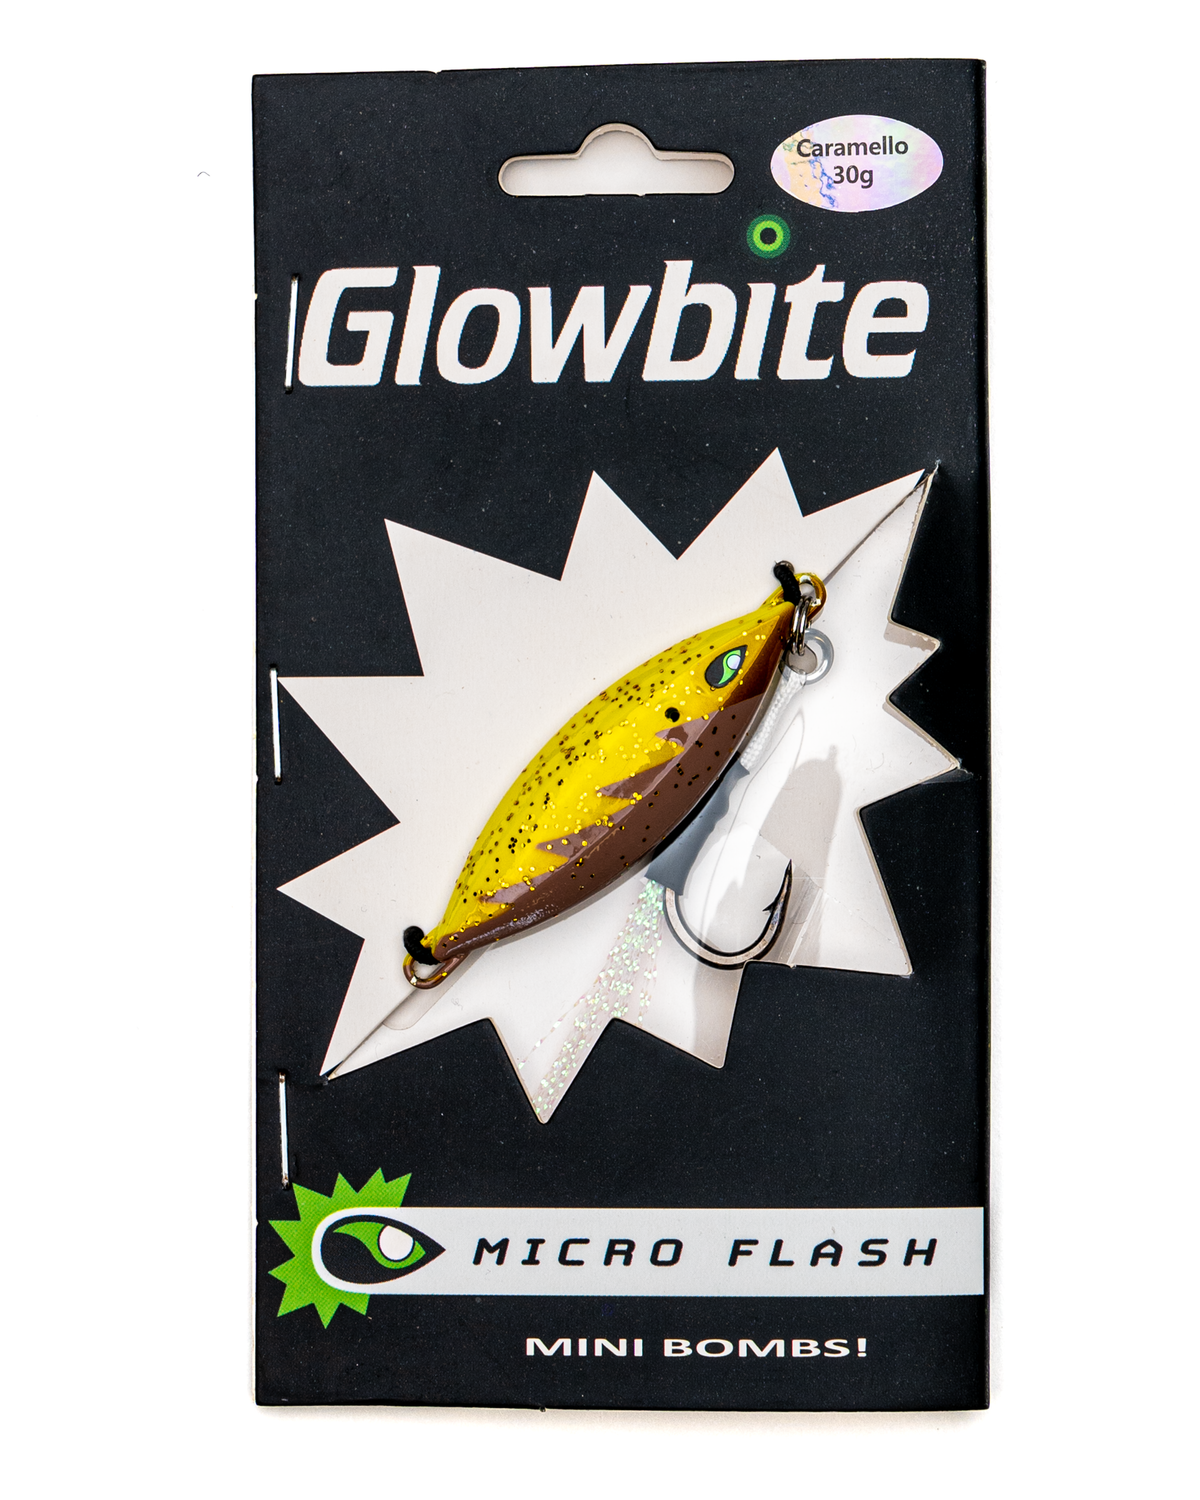 Glowbite Micro Flash – Caramello